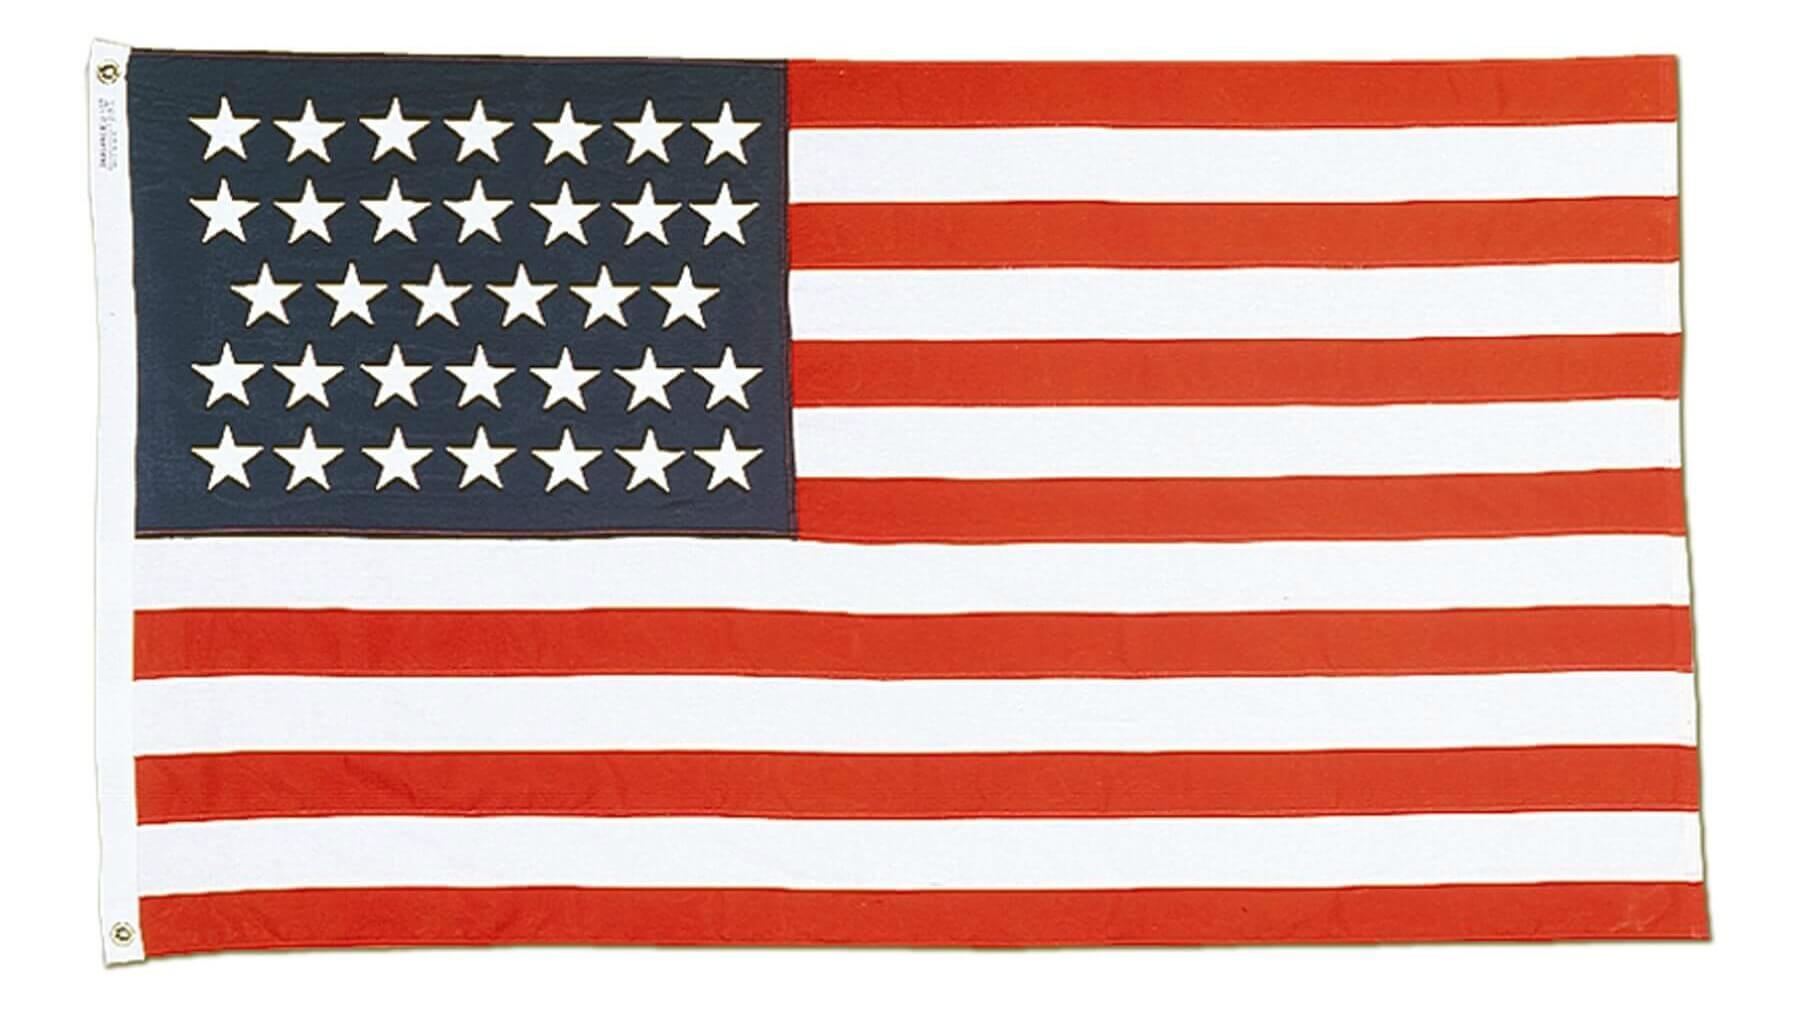 33 star U.S. flag